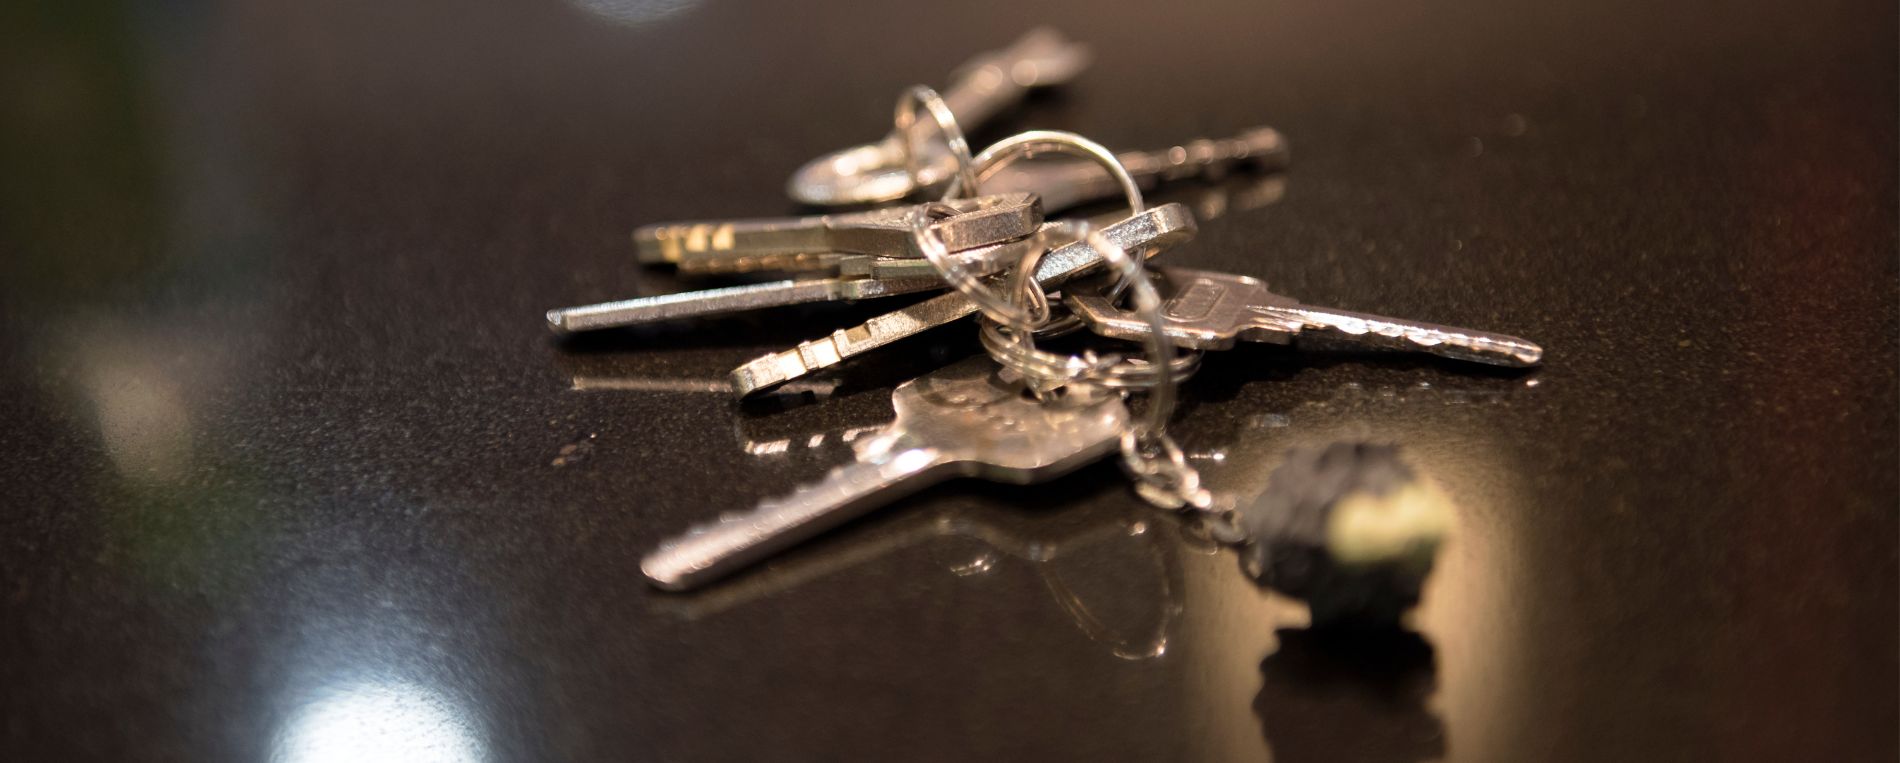 Old keys on a table